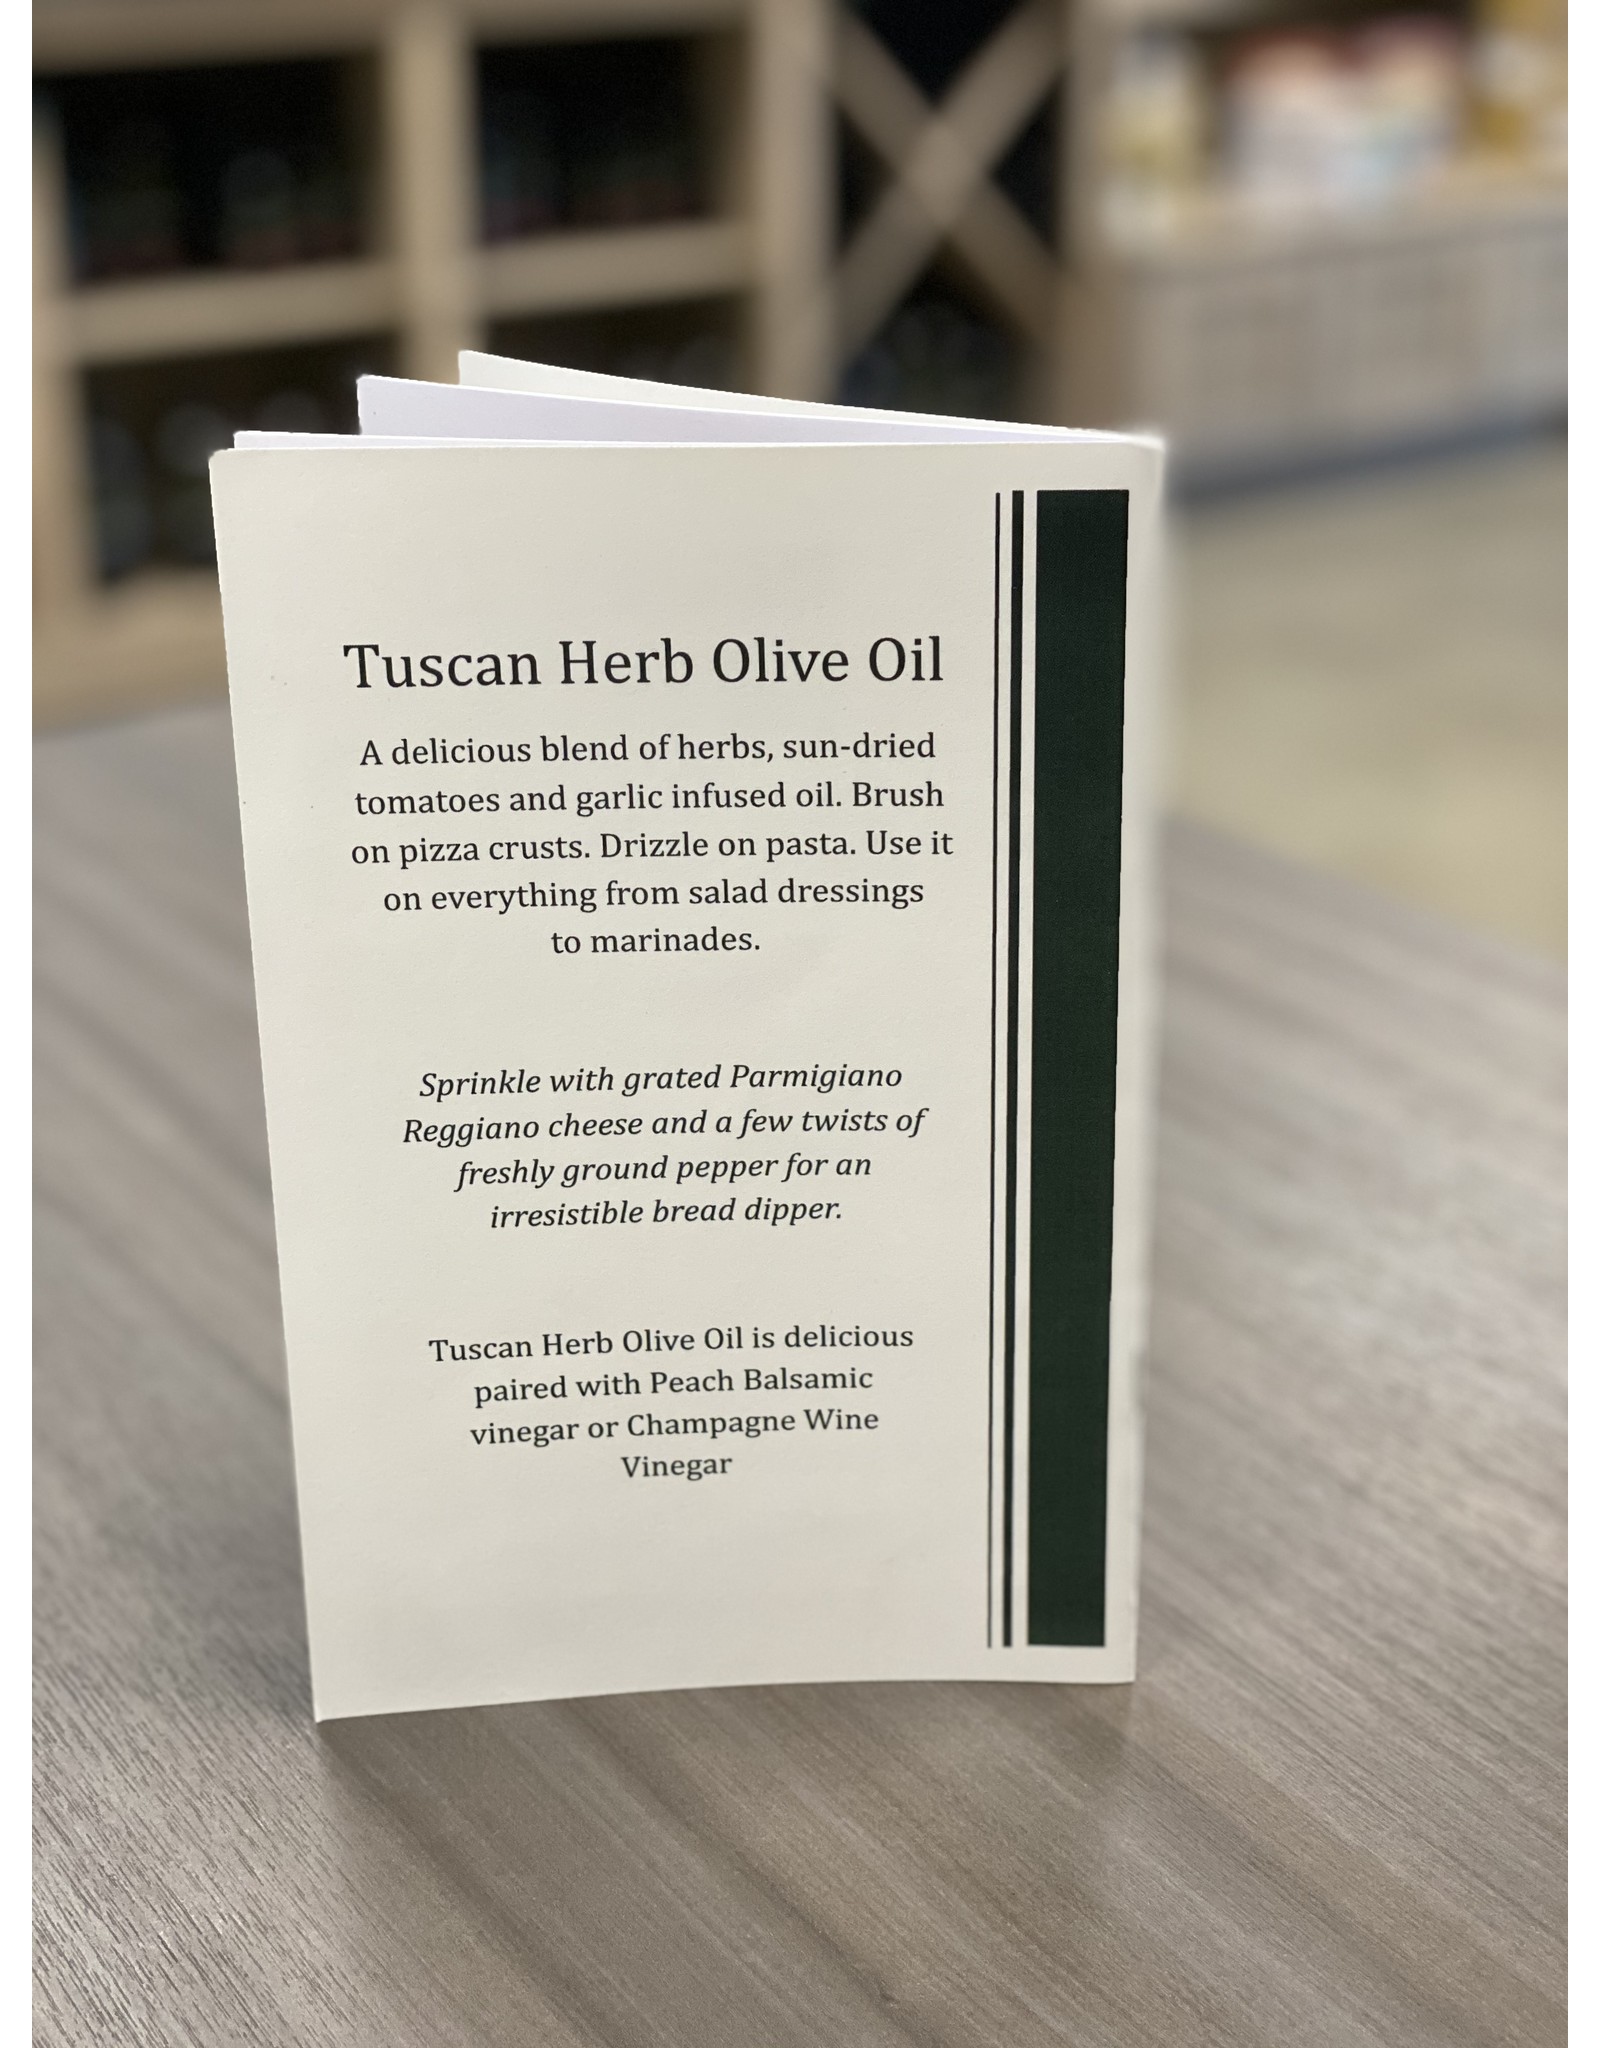 Tuscan Herb Olive Oil Recipe Book